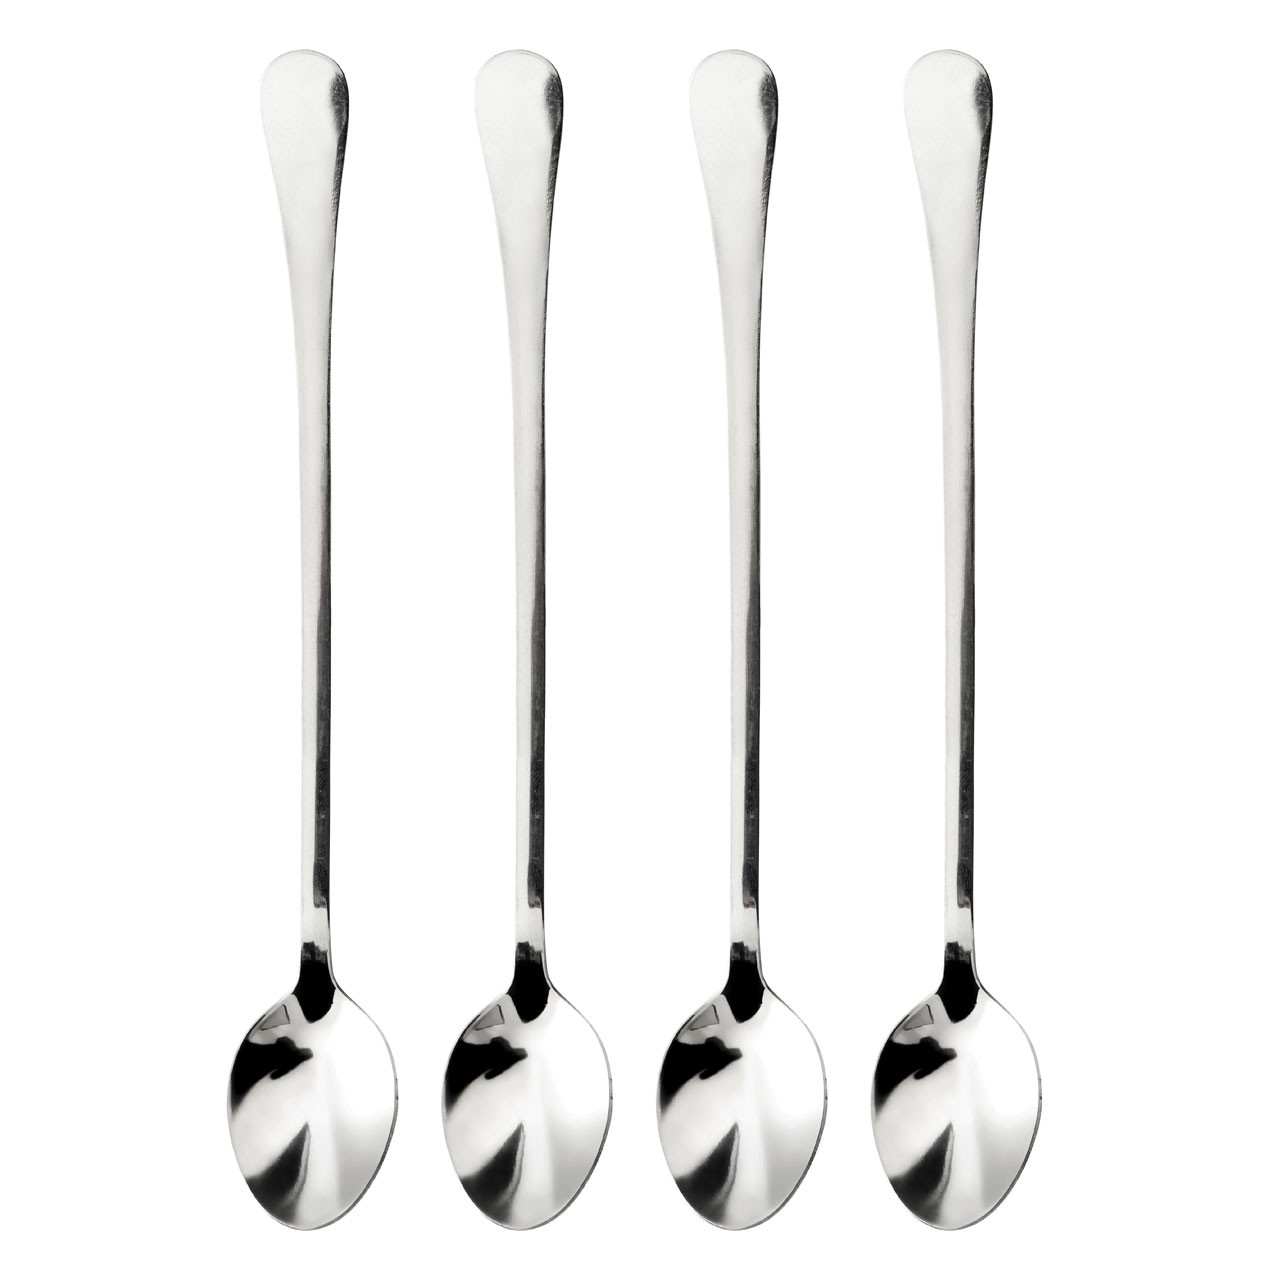 Latte Spoons - Set of 4 - Stainless steel